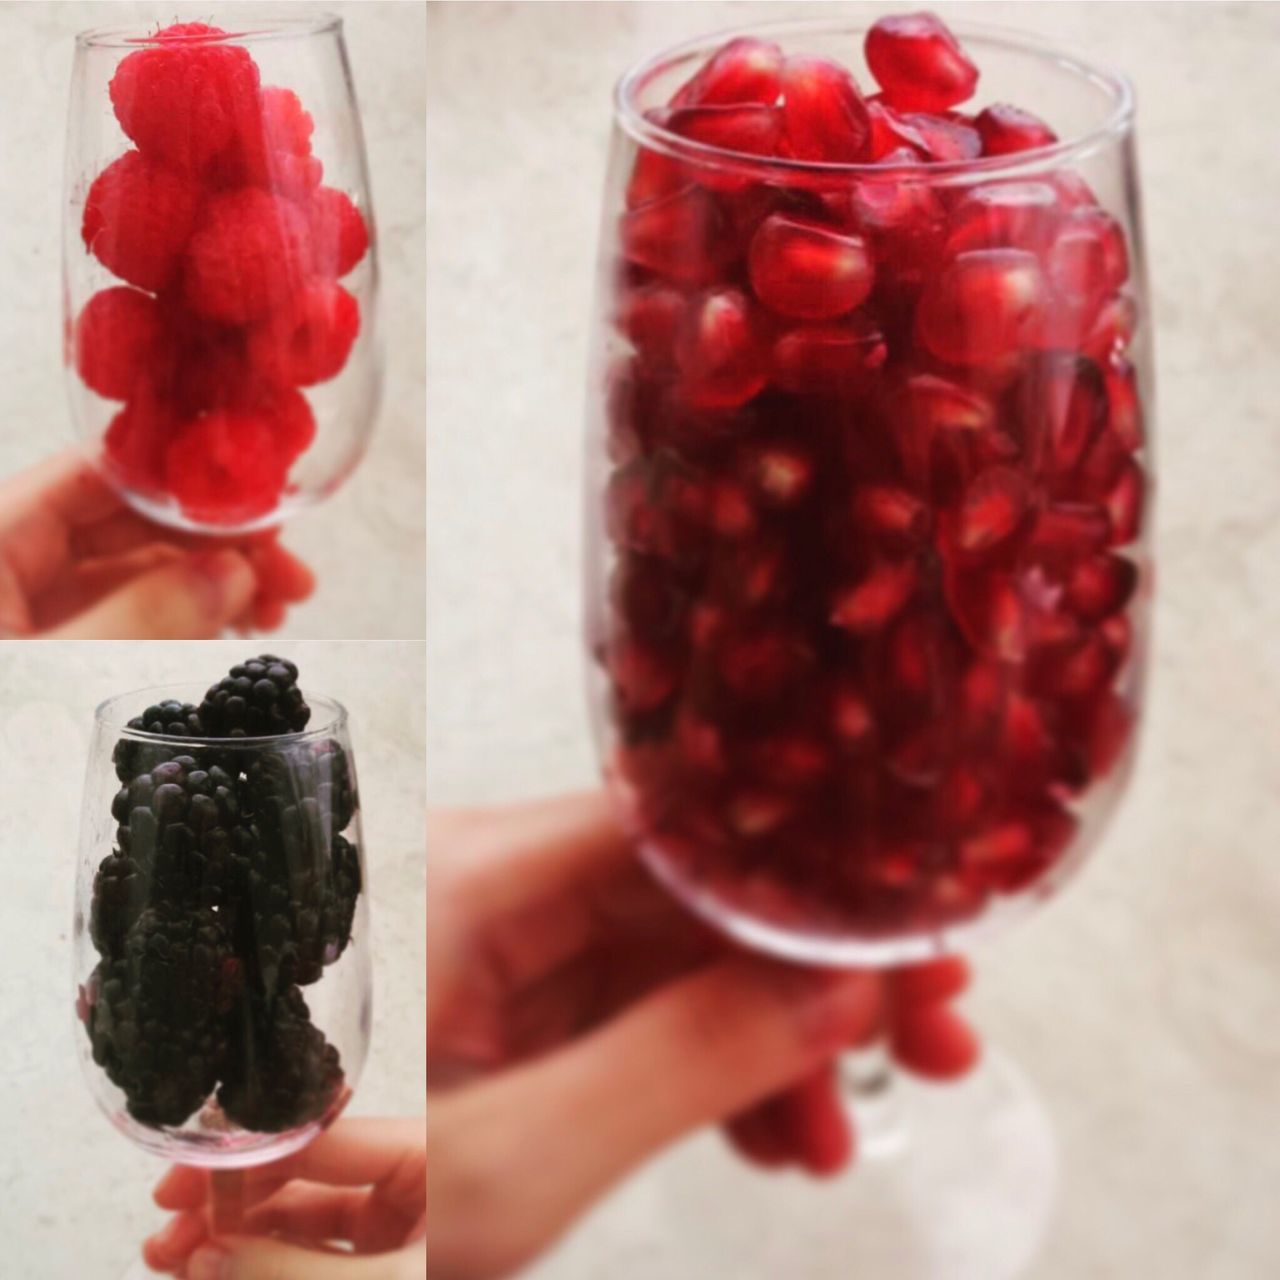 健康一點點😋#health #fruits#redpomegranate#raspberry#mulberry